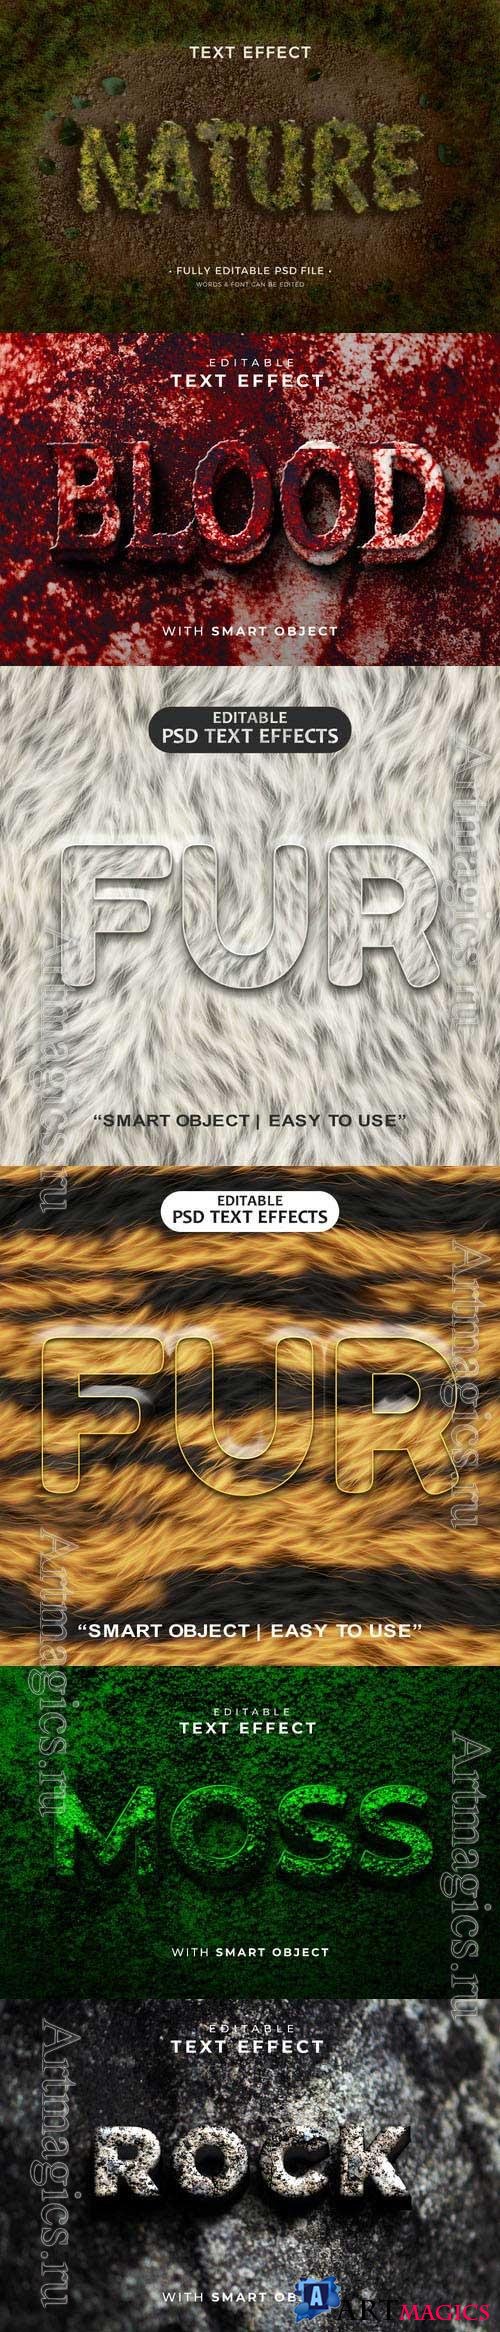 Psd style text effect editable set vol 463